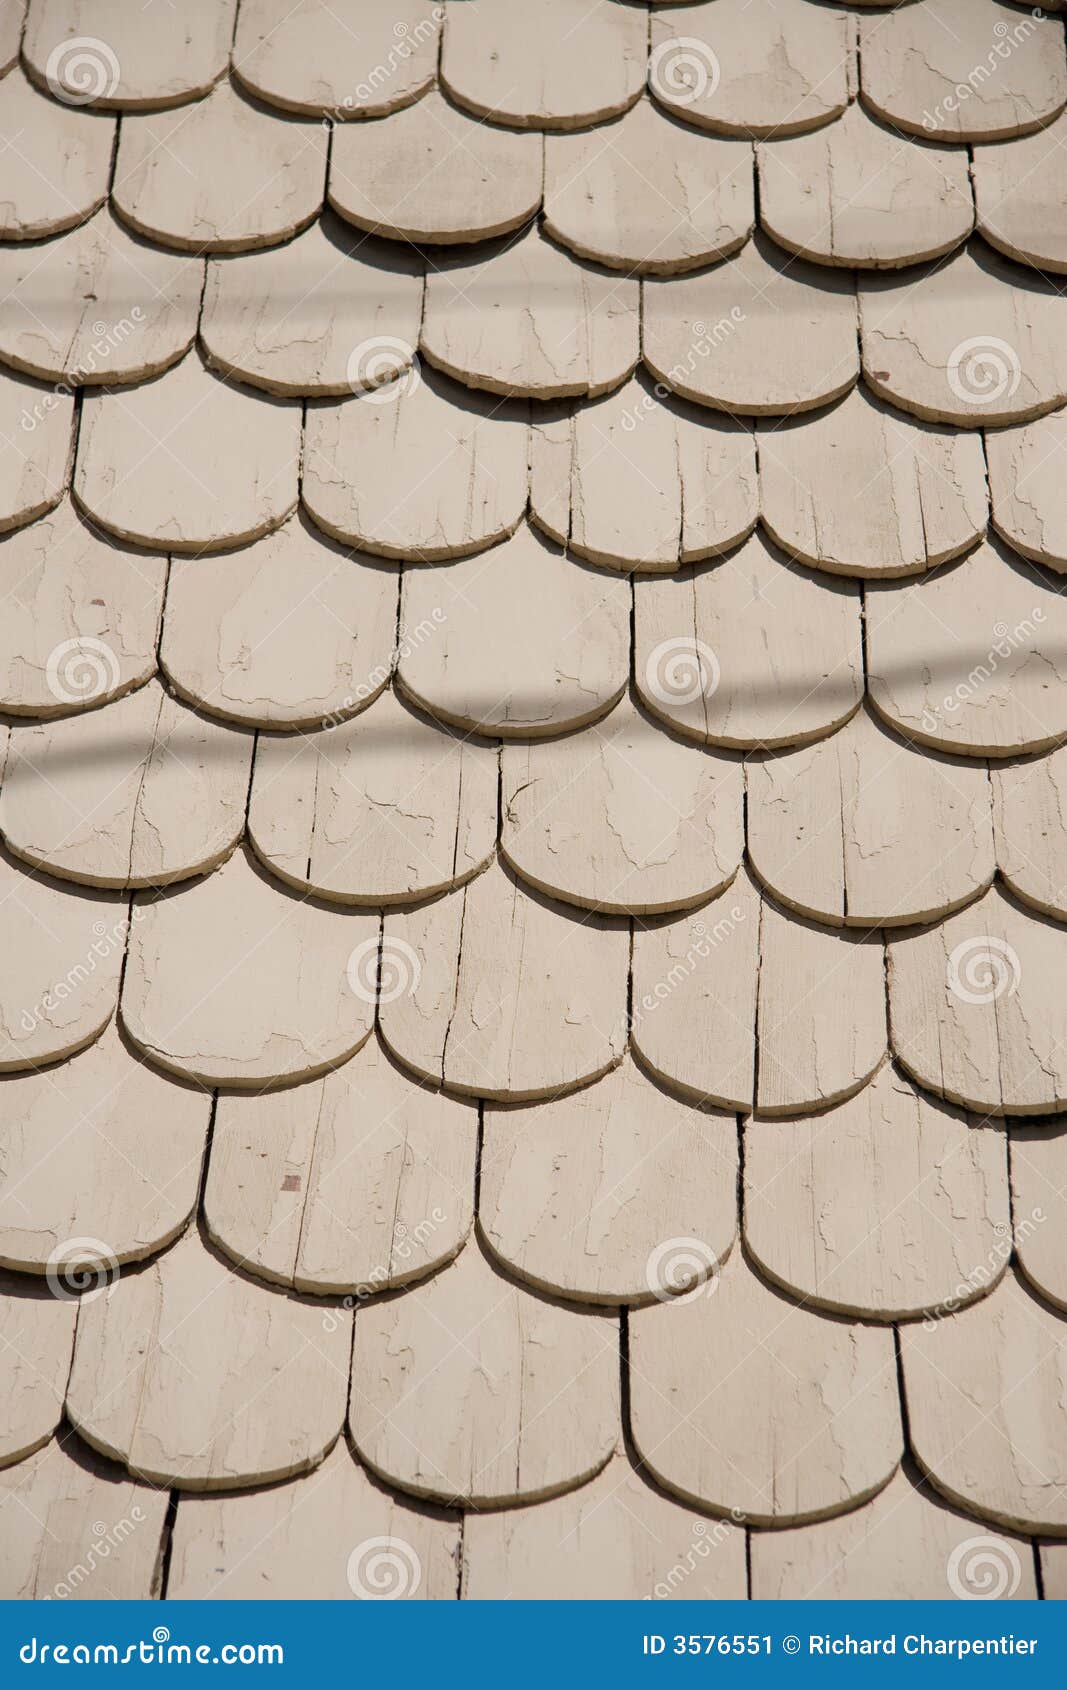 abstract-roof-shingles-3576551.jpg